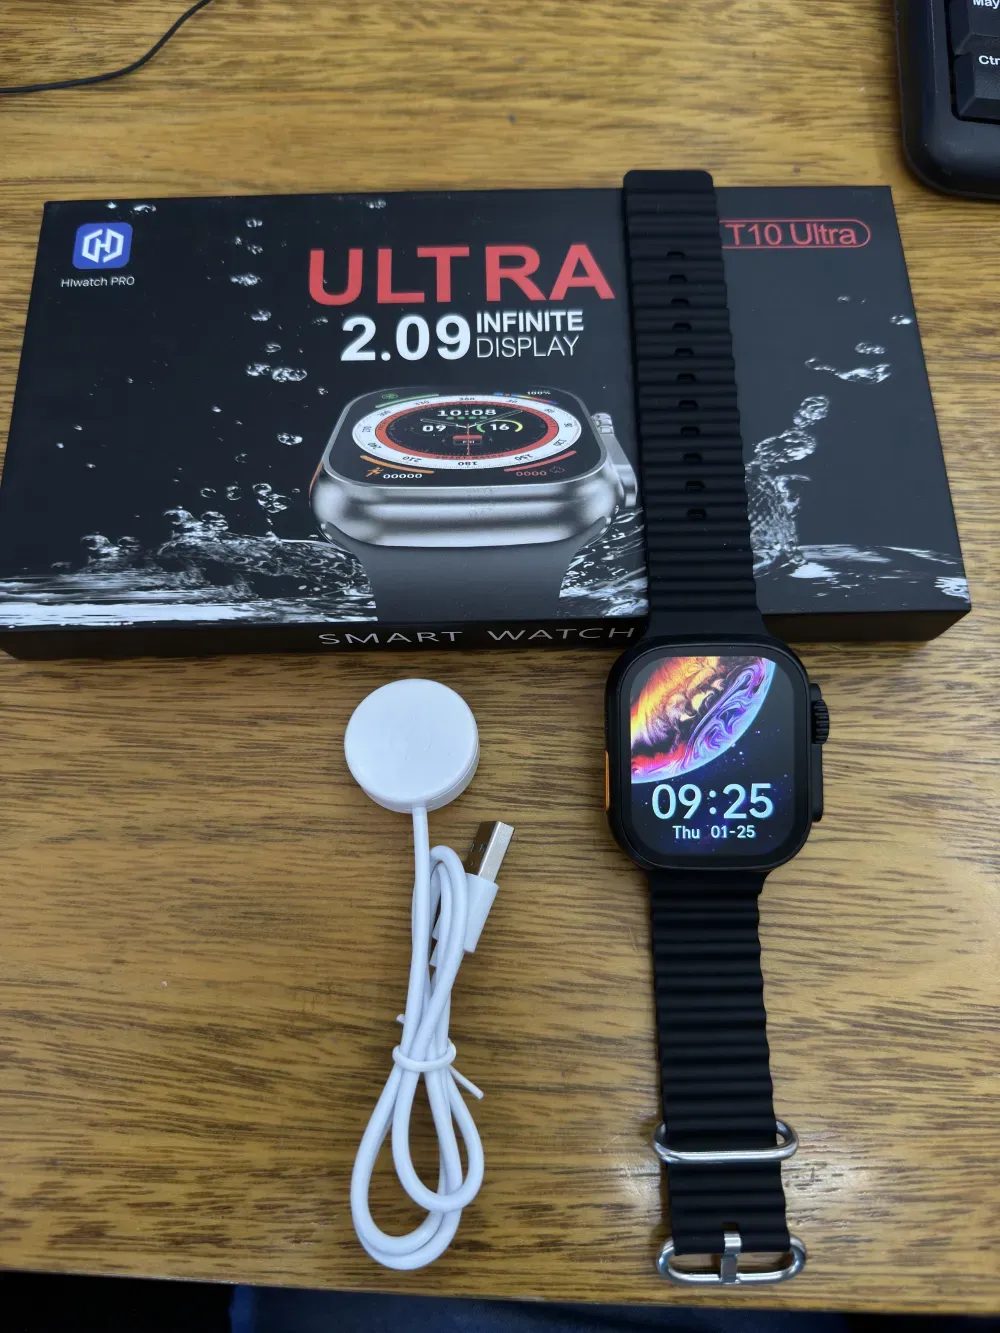 Smartwatch T80 Ultra